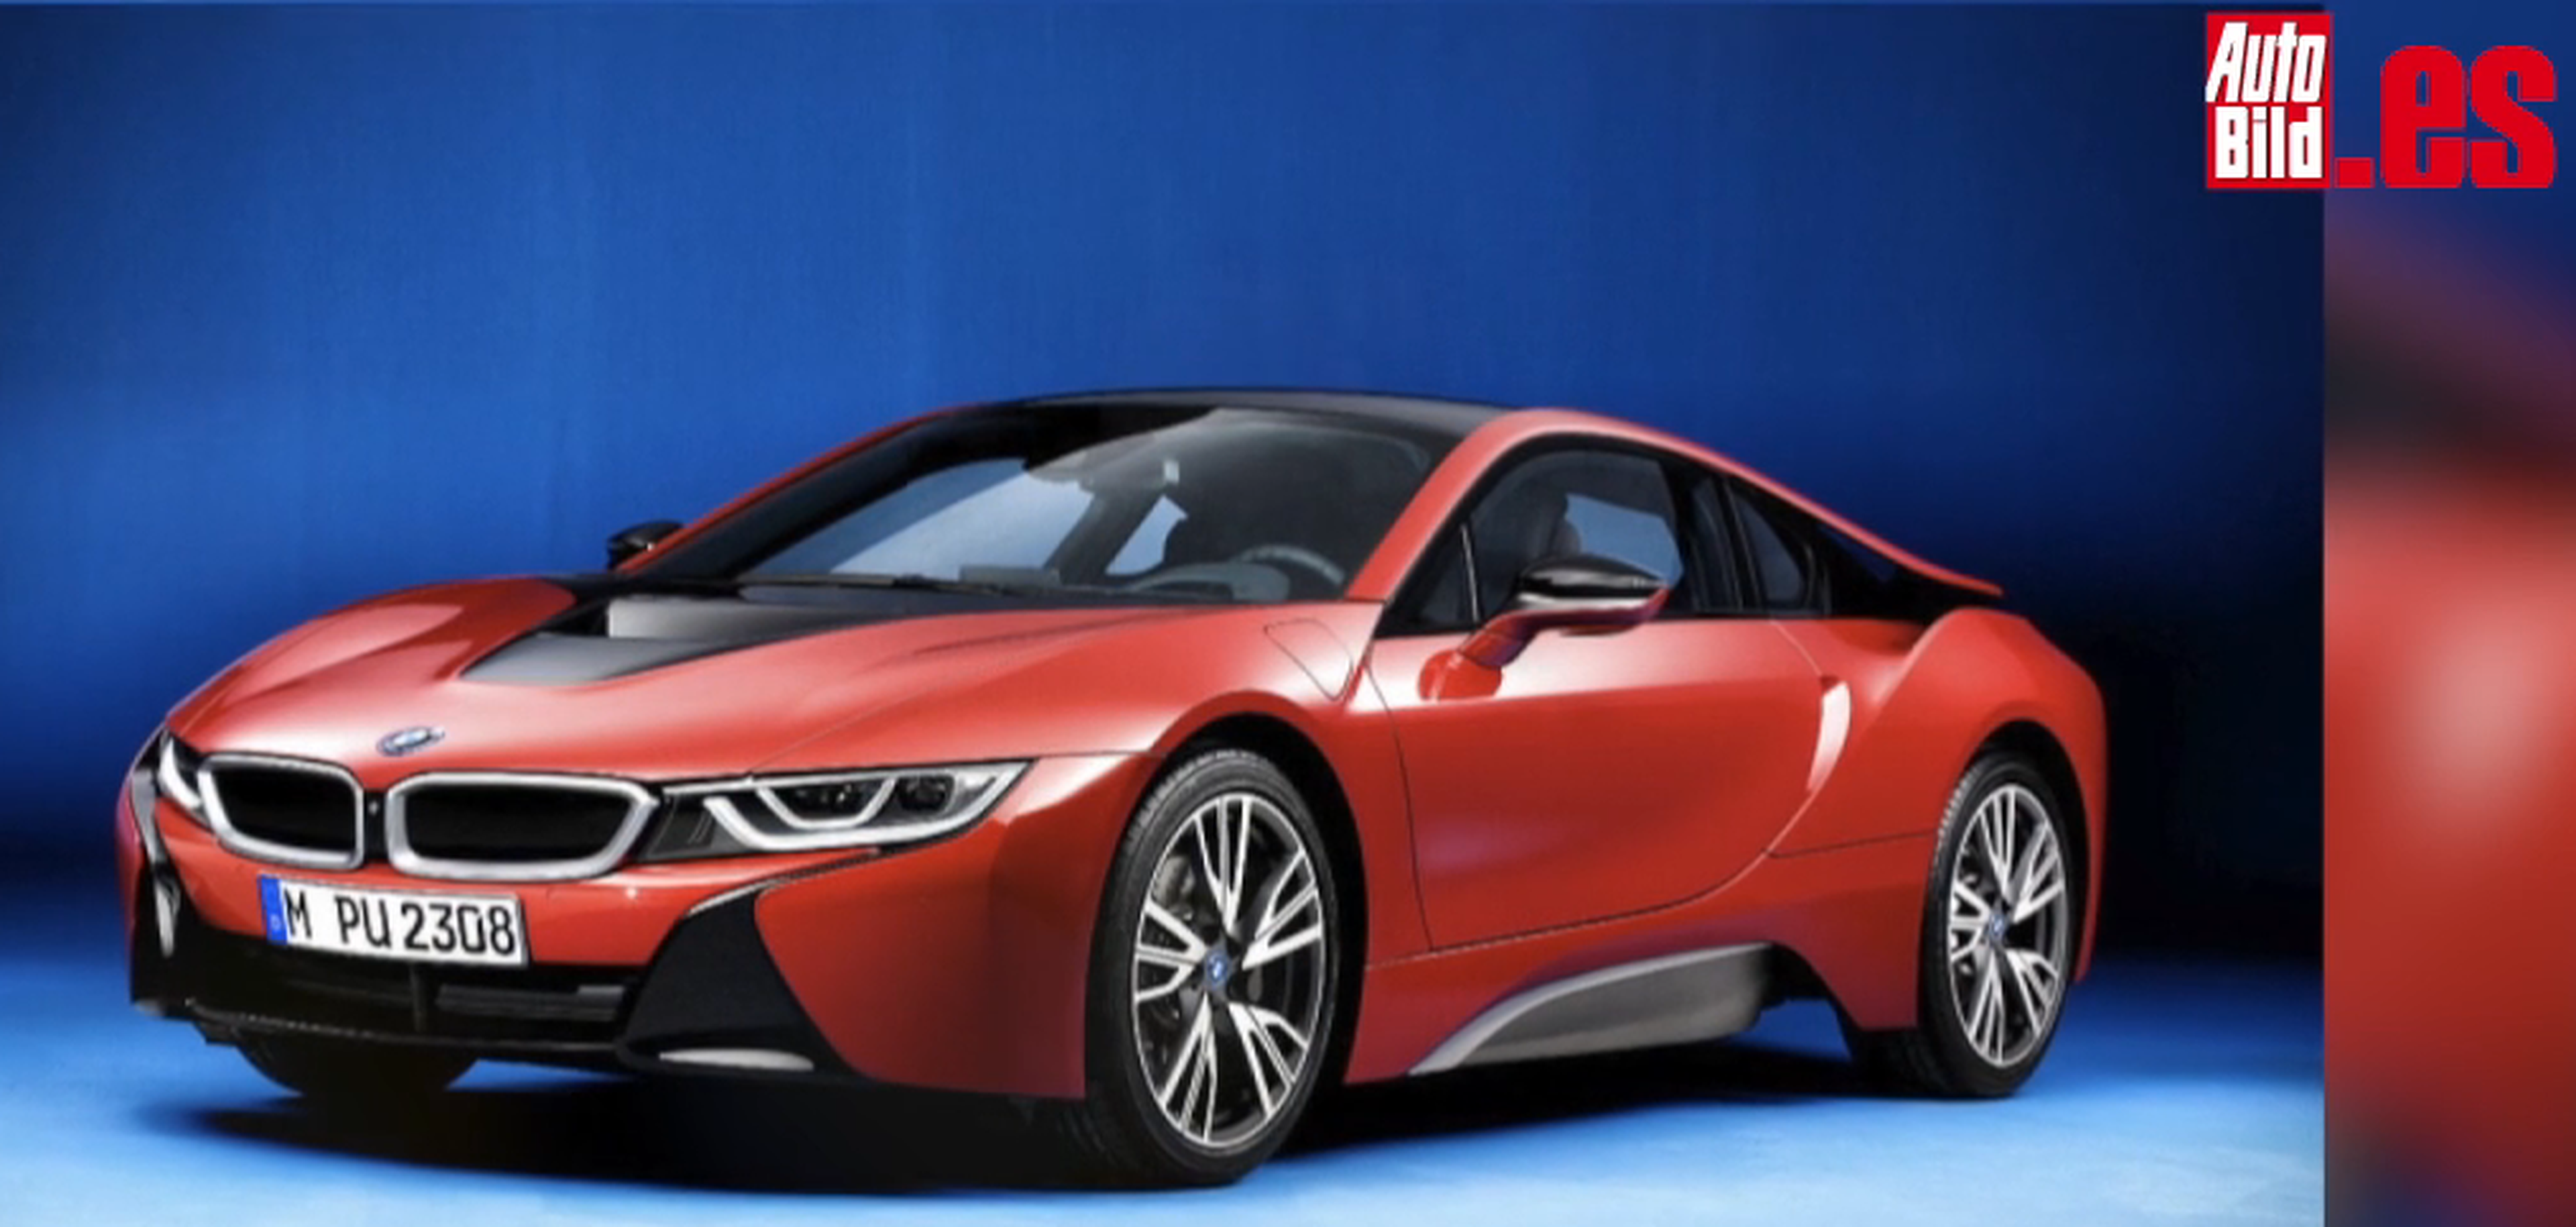 BMW i8 Protonic Red Edition: híbrido, deportivo y pasional